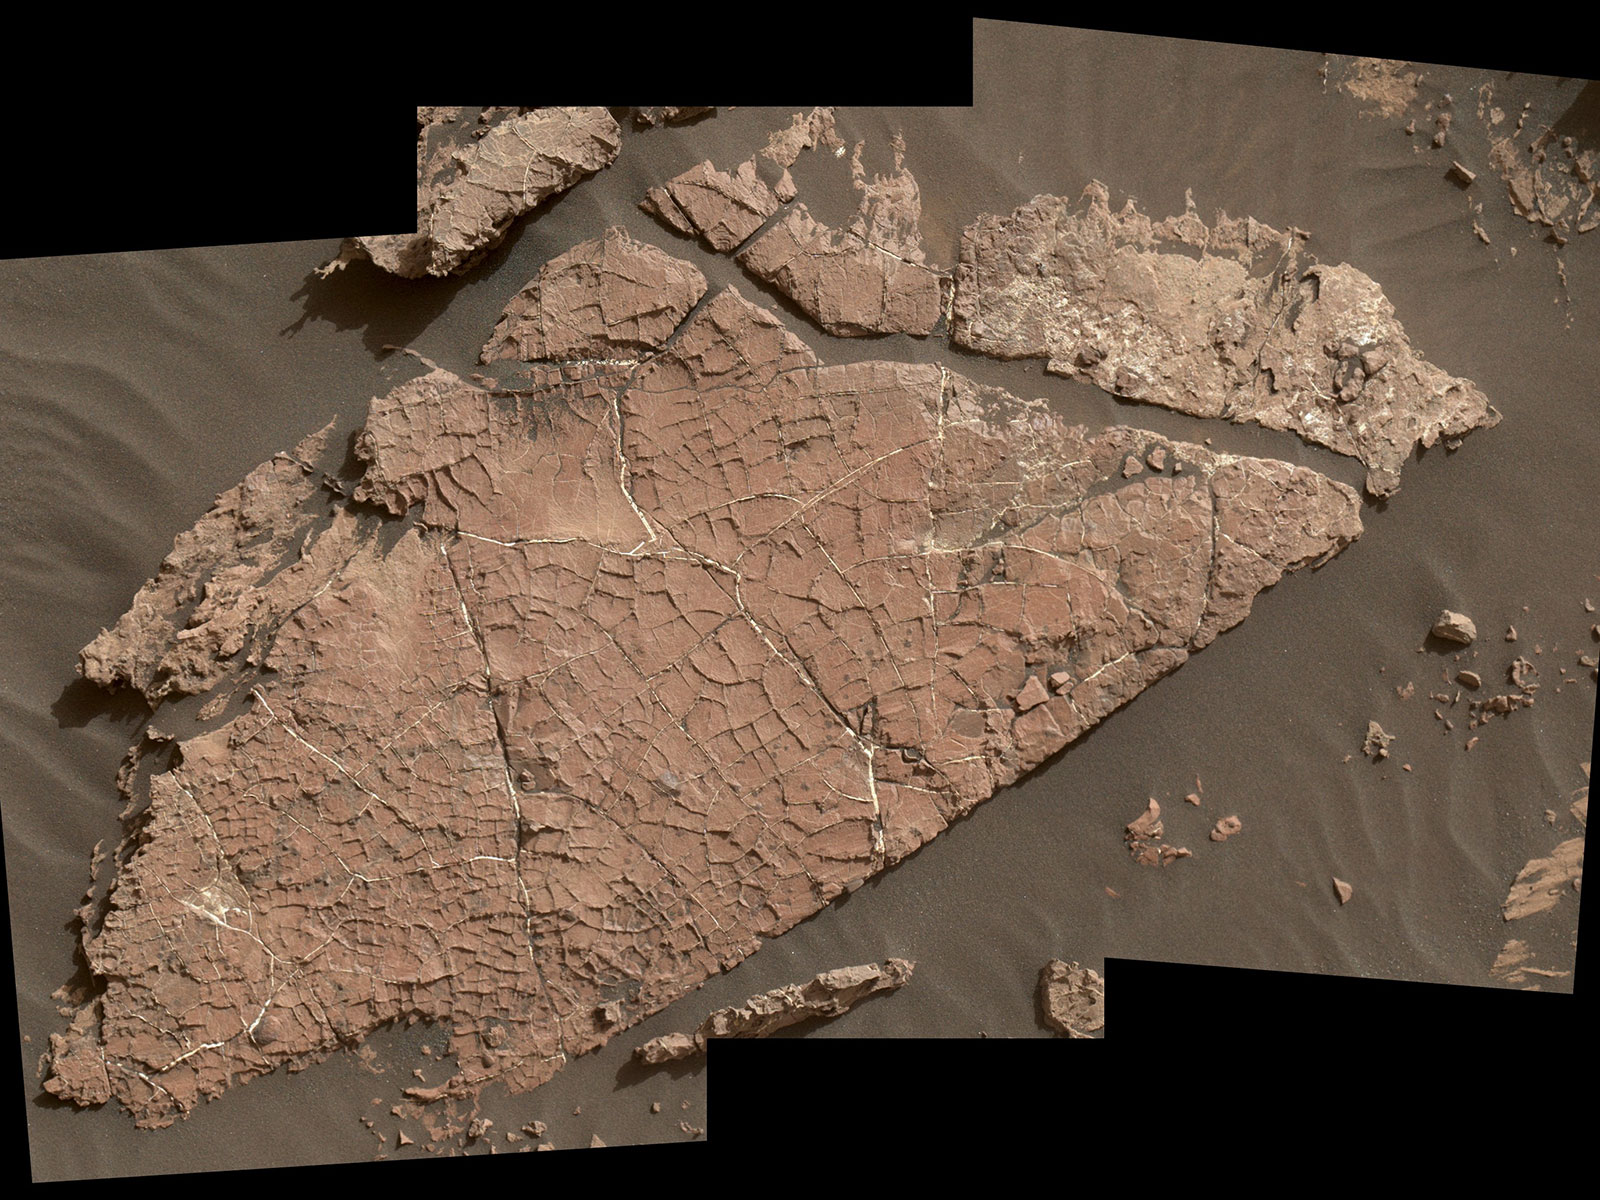 Photo displaying network of cracks on Martian rock slab called "Old Soaker"